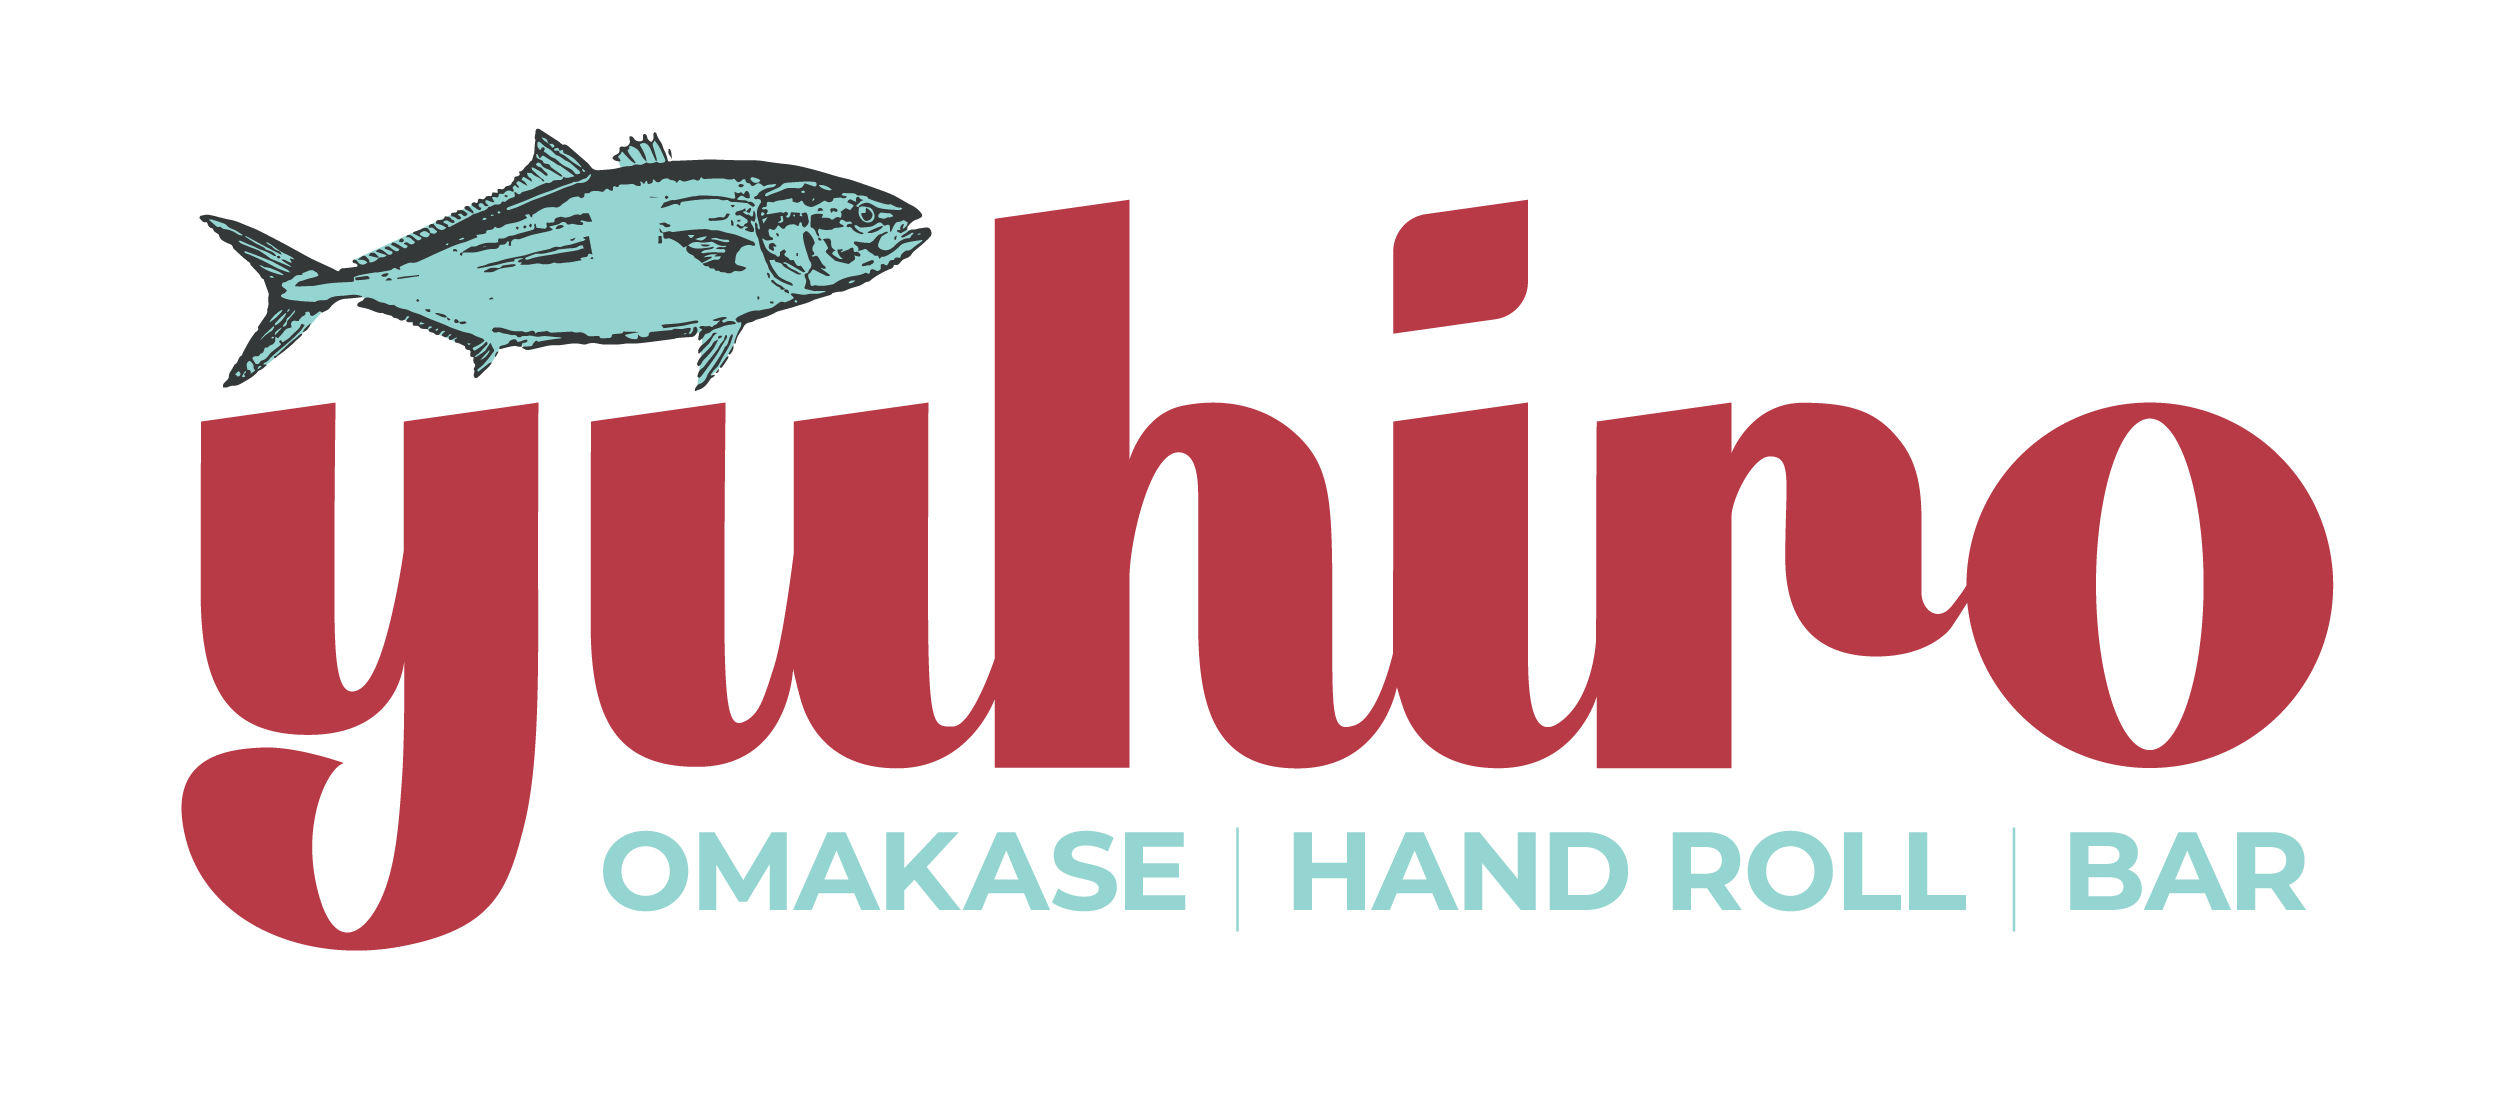 Yuhiro Omakase and Hand Roll Sushi Bar